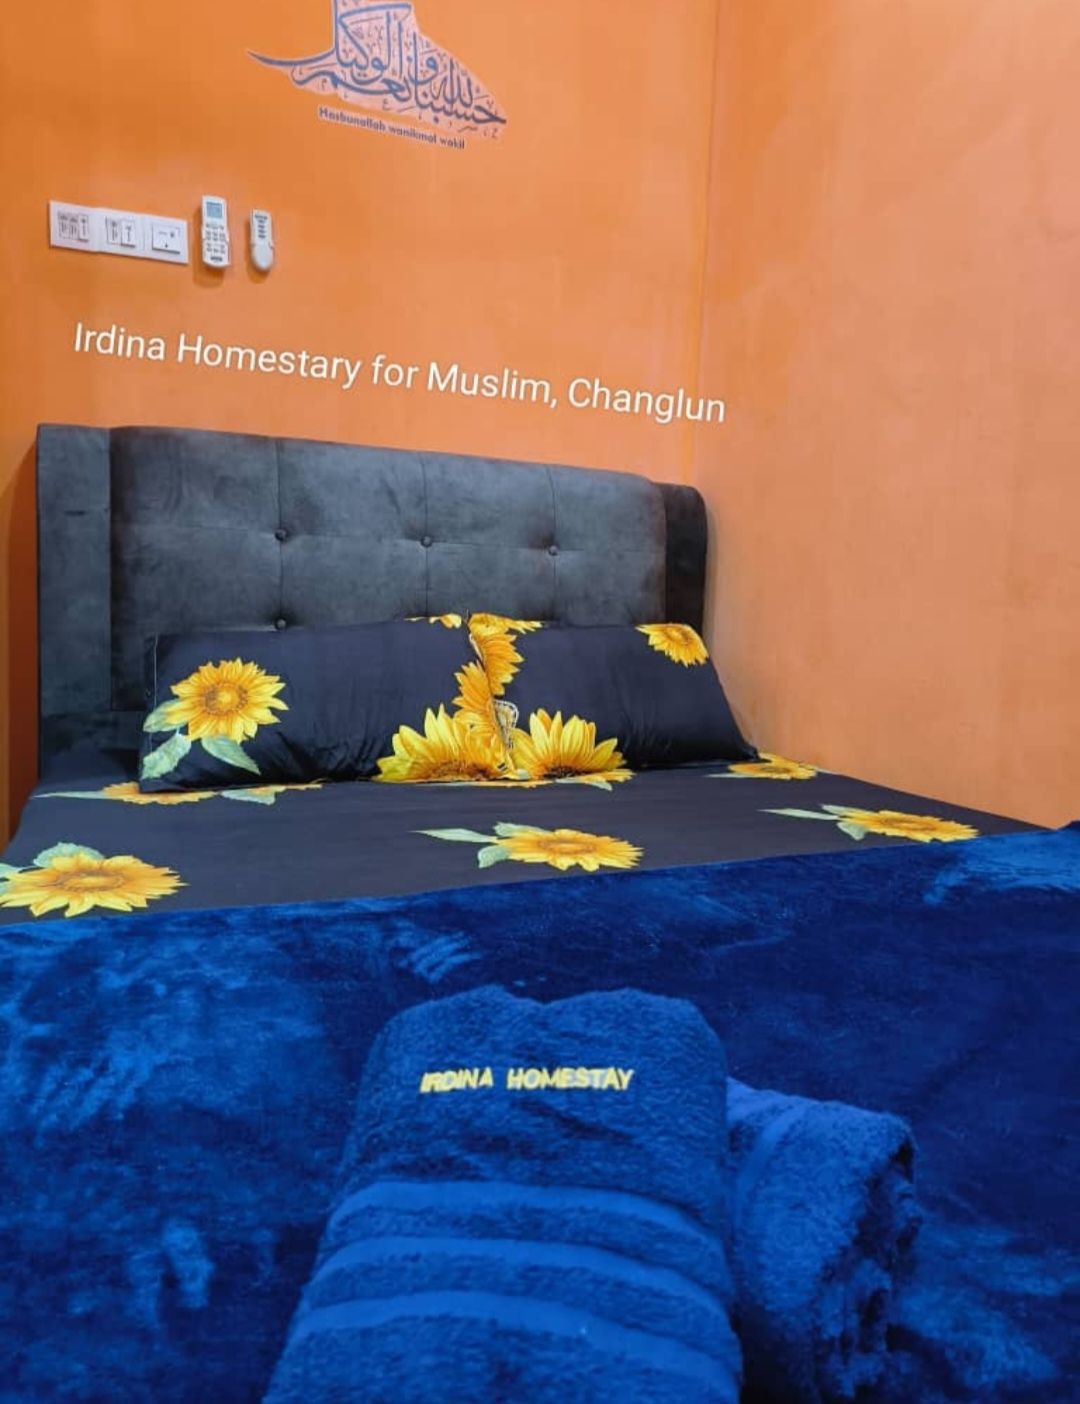 Irdina Homestay forMuslims - Changlun